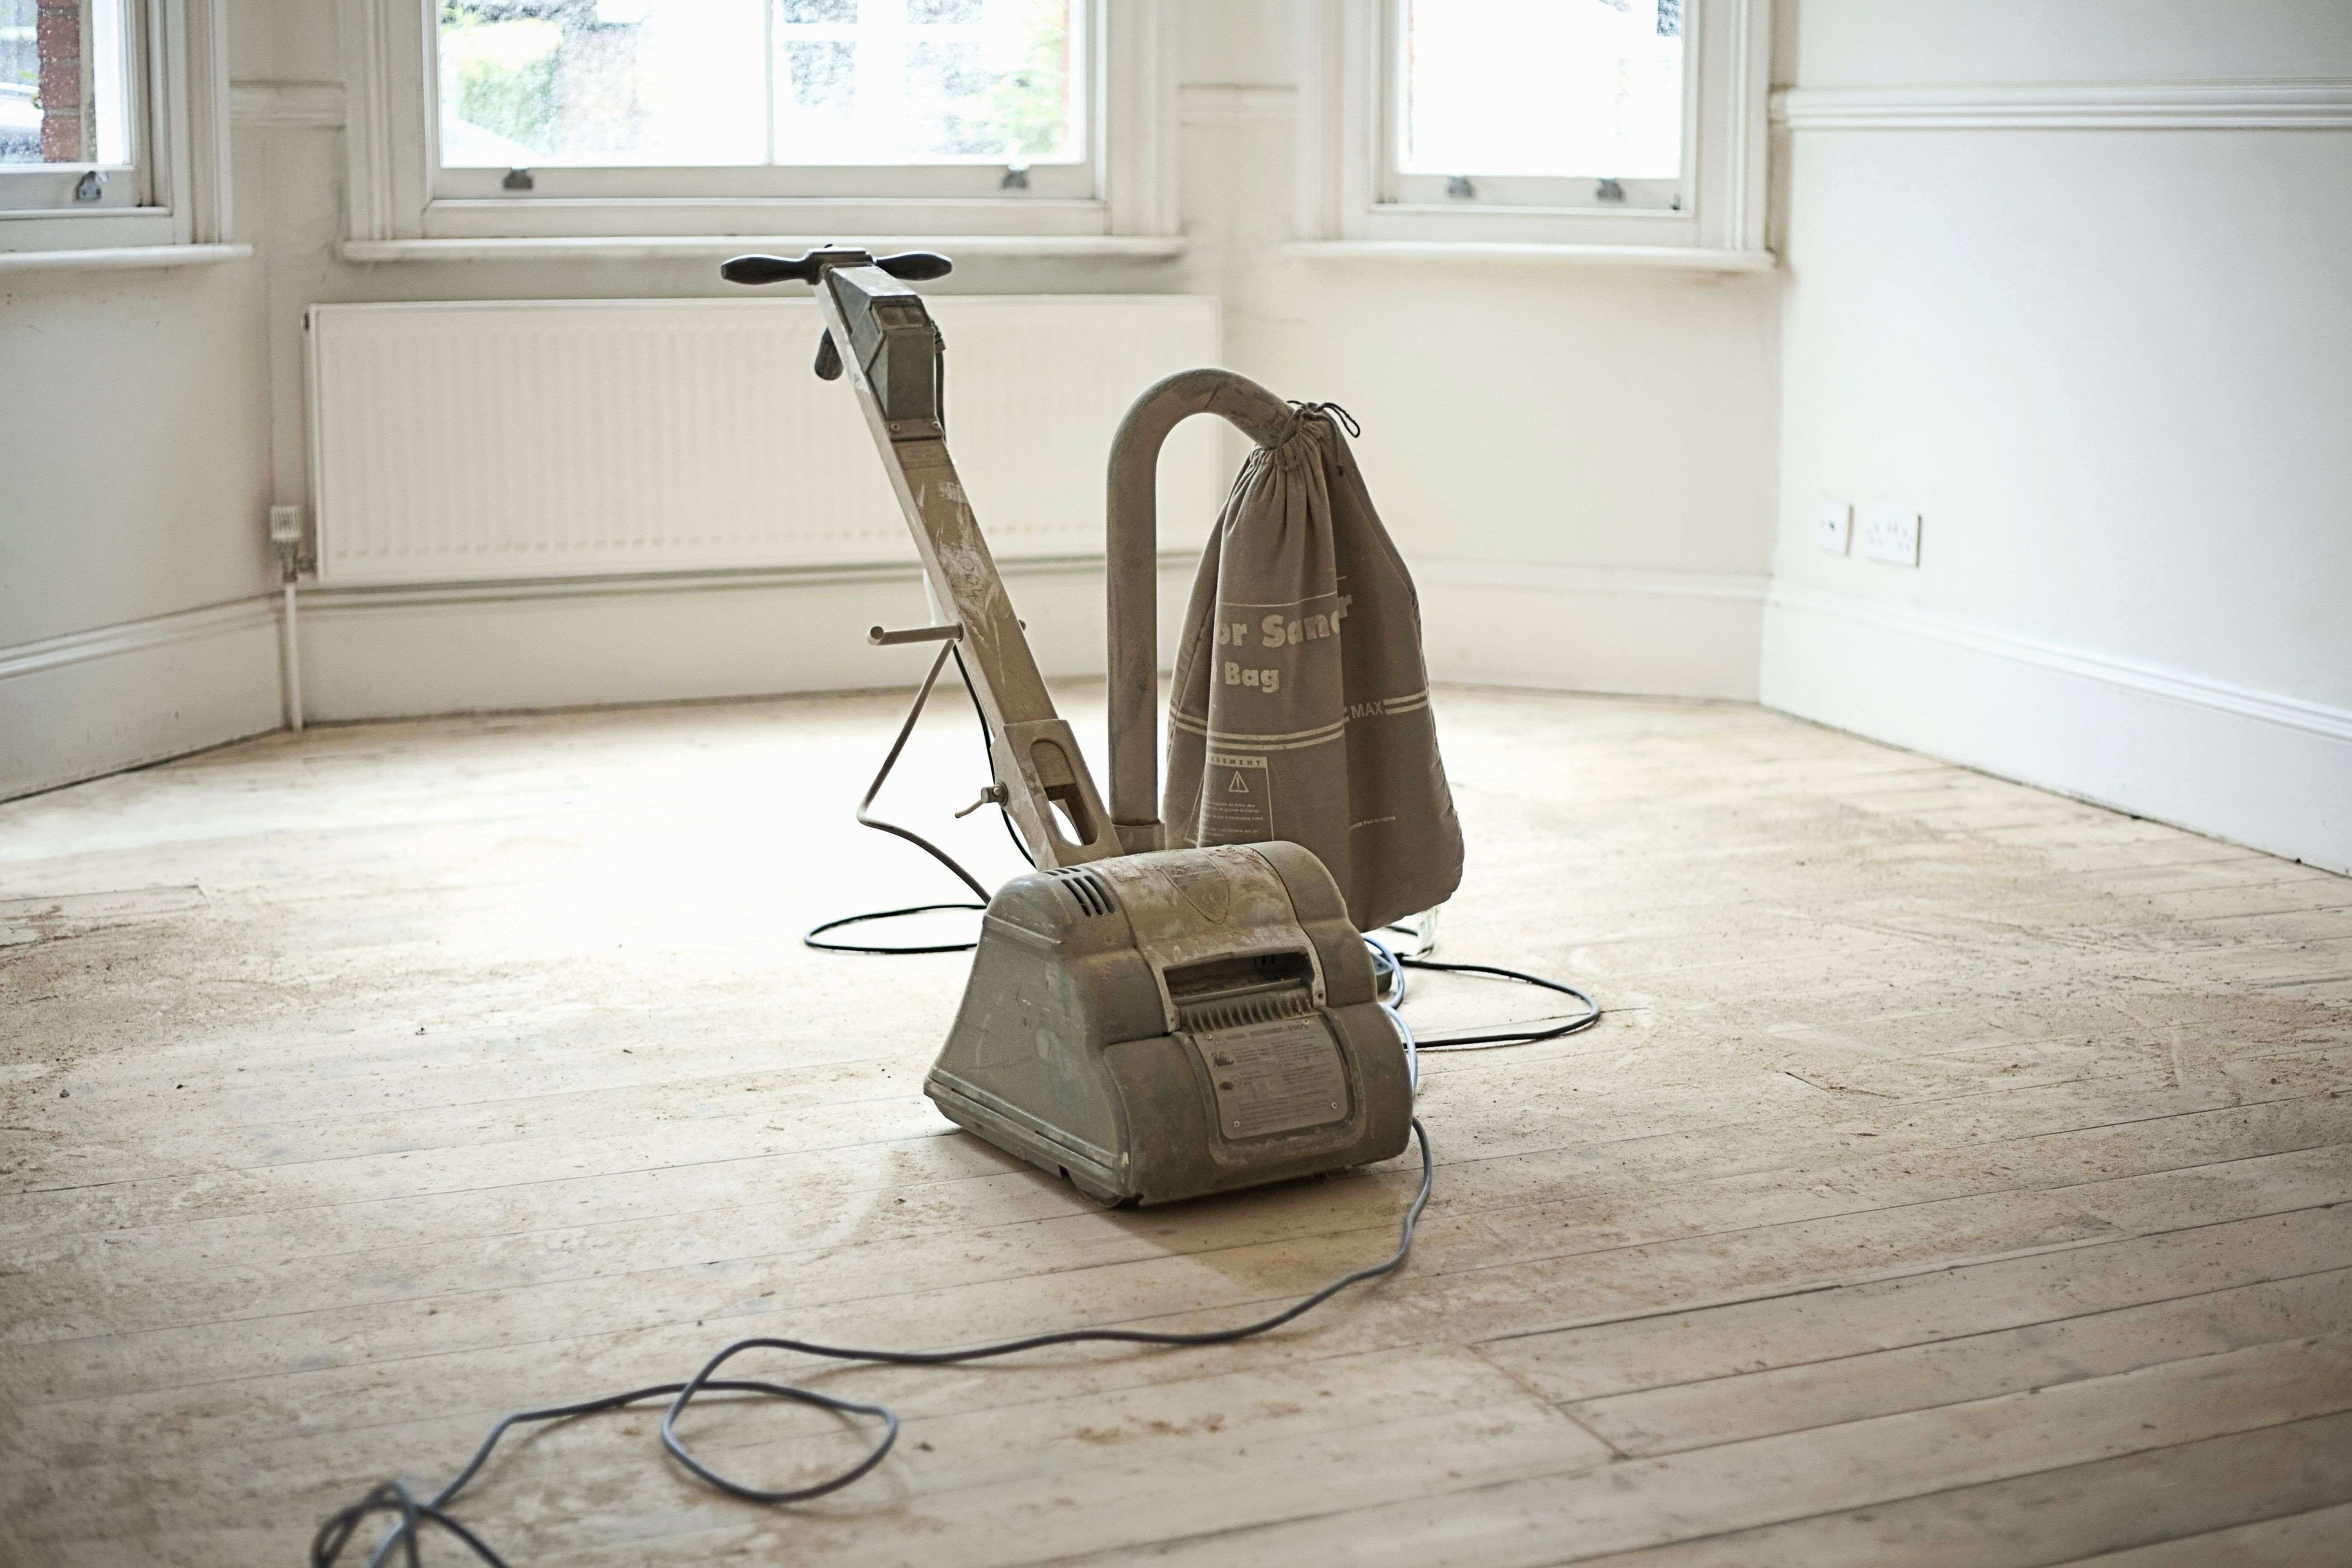 vacuum cleaner for hardwood floors reviews of floor sanders to rent when finishing your wood floor in sander on wooden floorboards of new home 179707189 588760815f9b58bdb3fed440